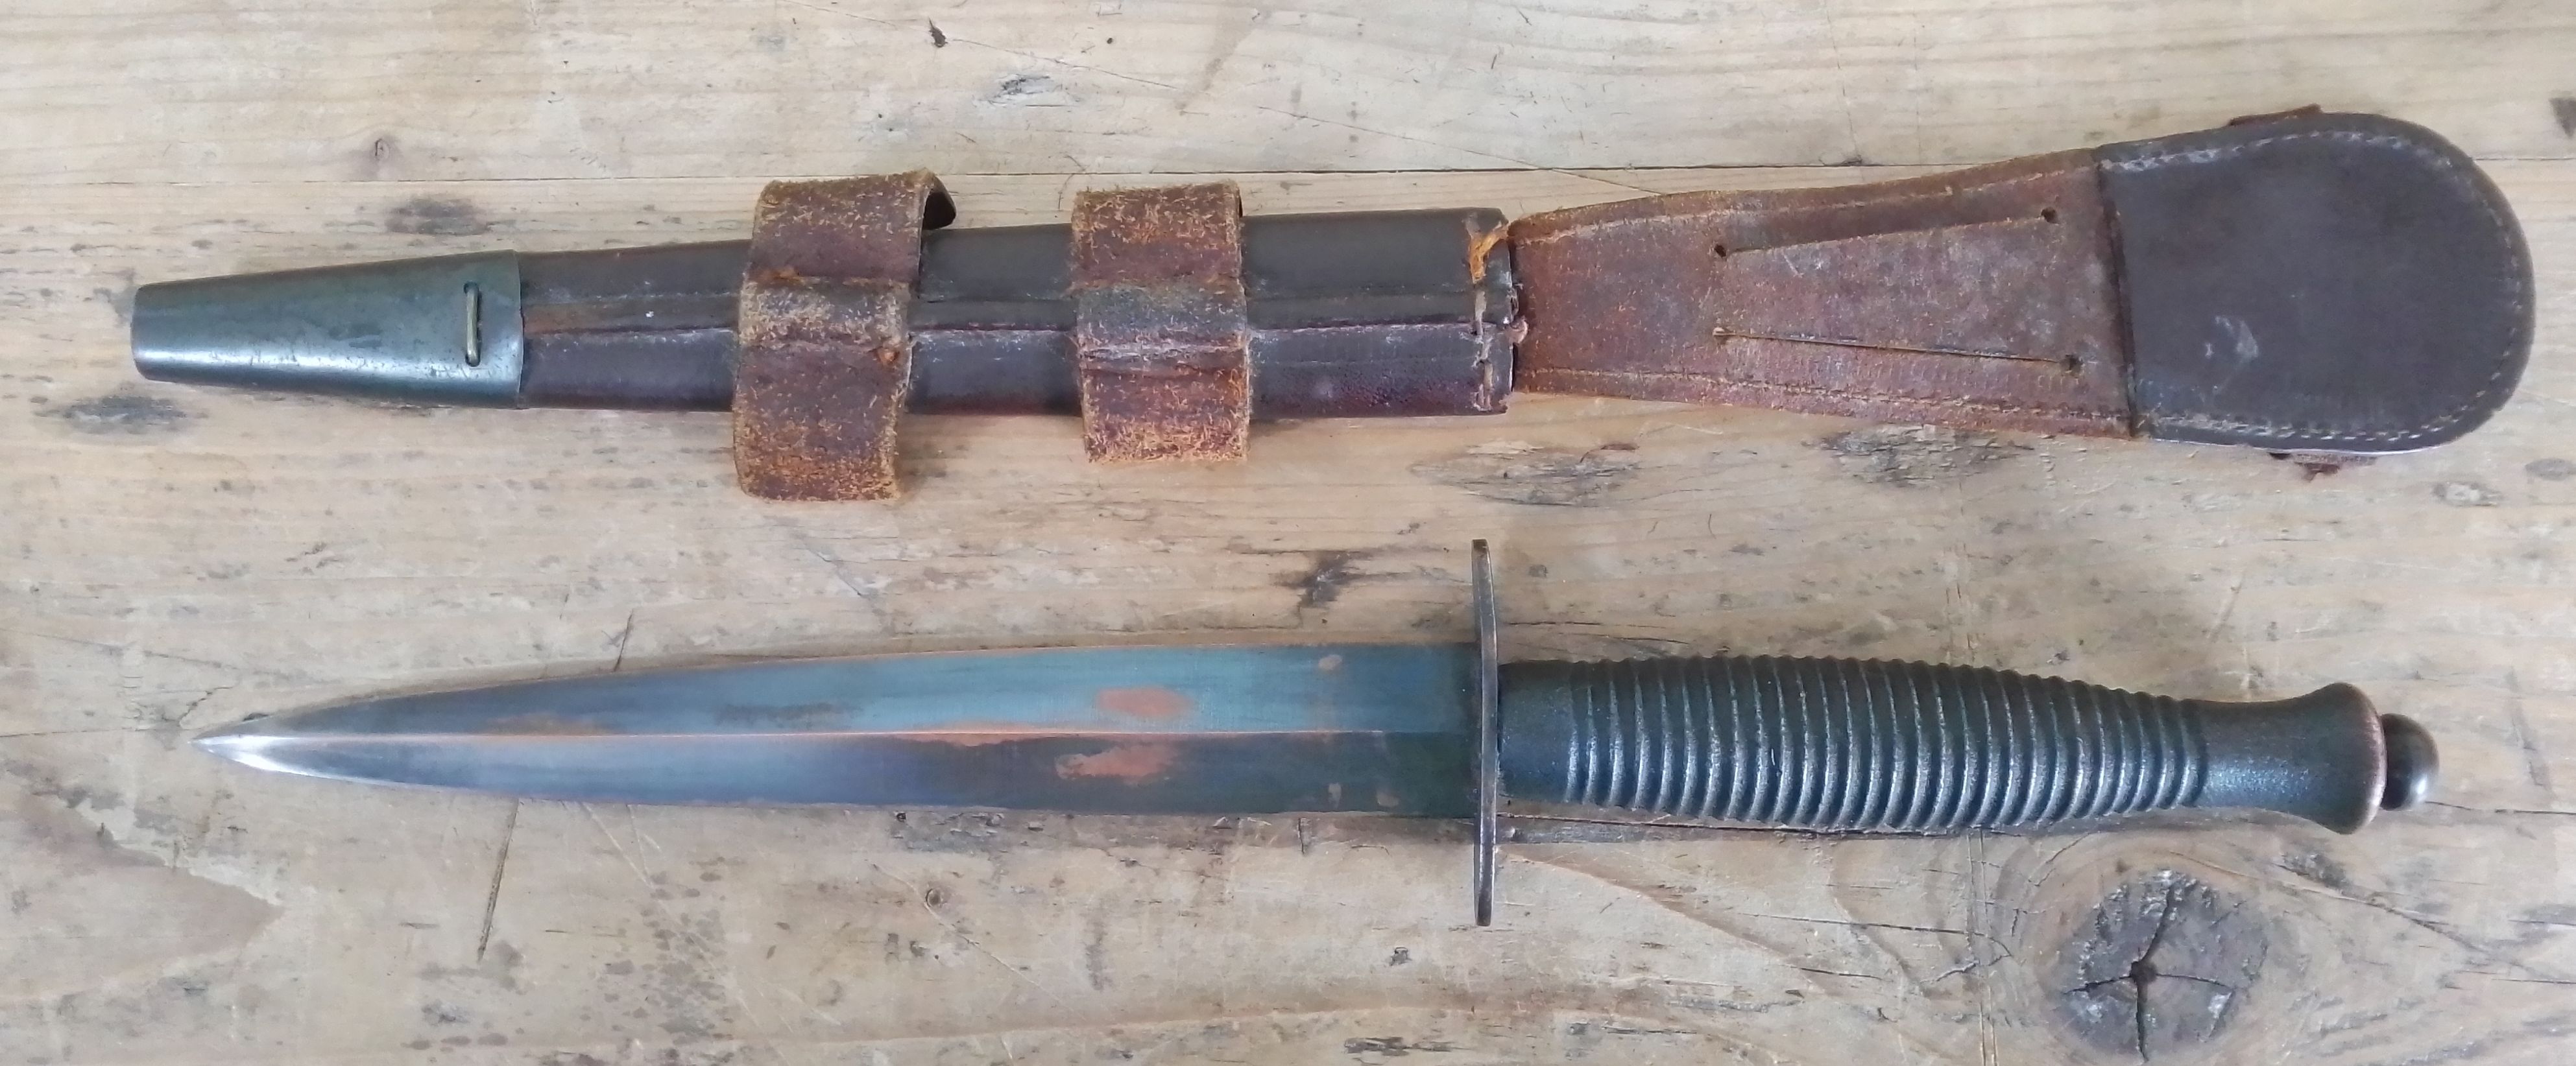 A post war Fairbairn Sykes British commando dagger and sheath. - Bild 2 aus 2